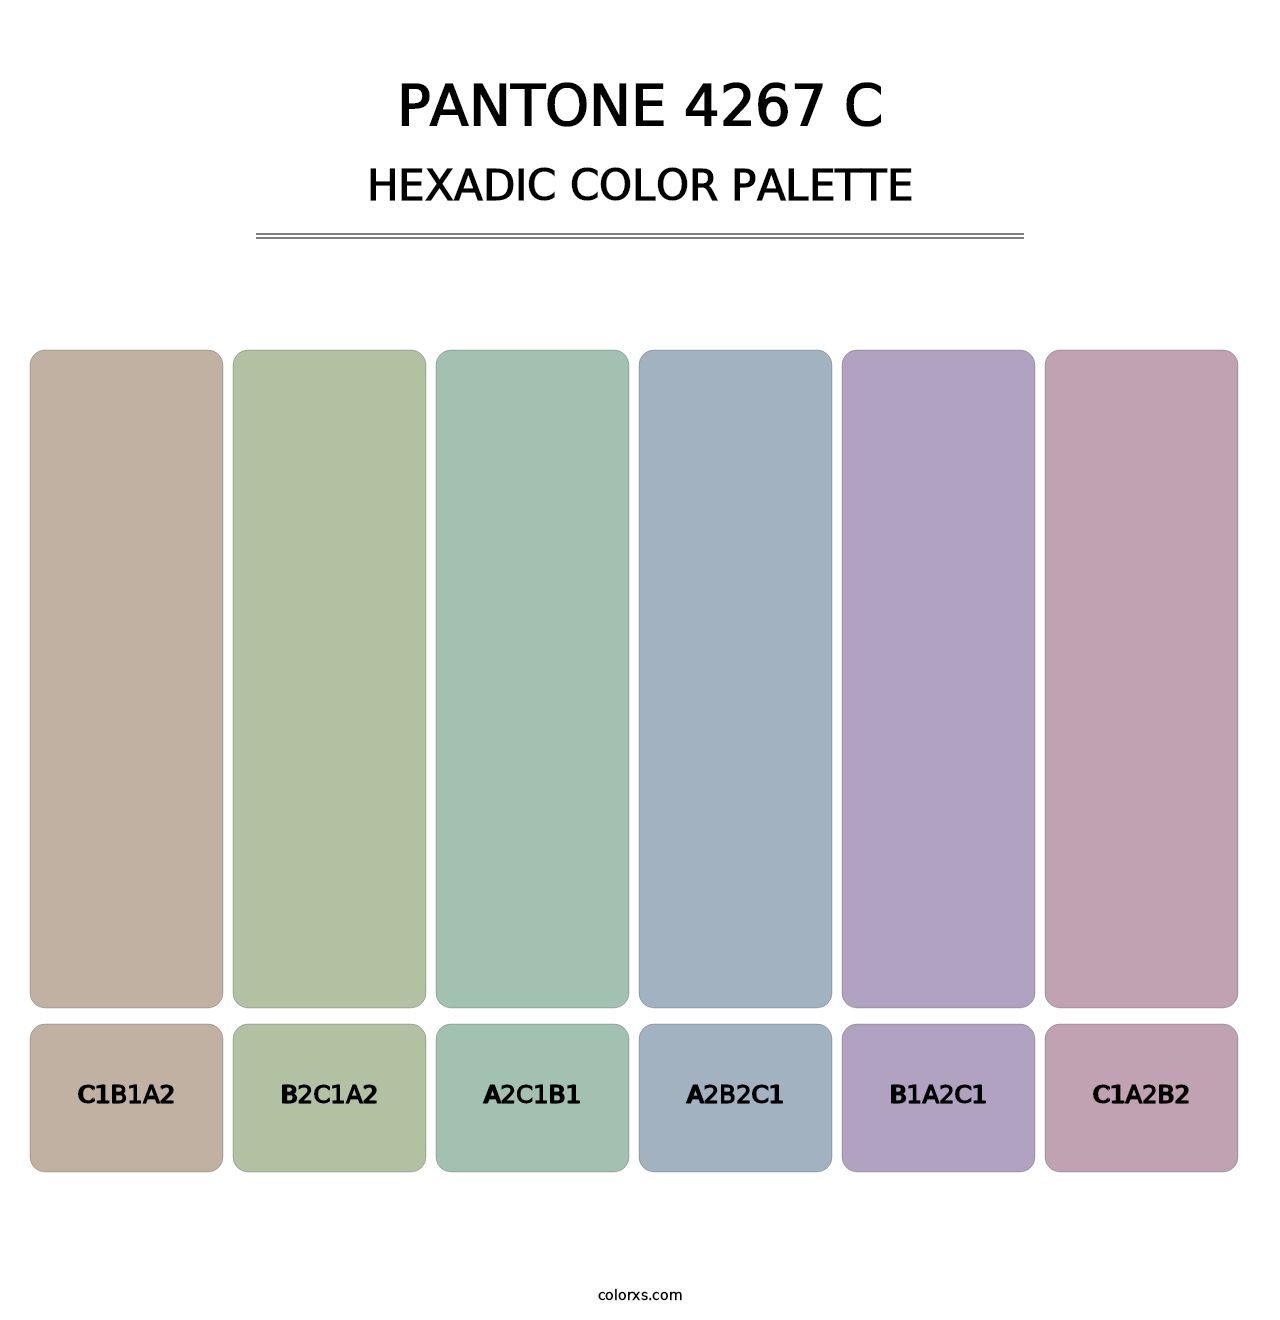 PANTONE 4267 C - Hexadic Color Palette